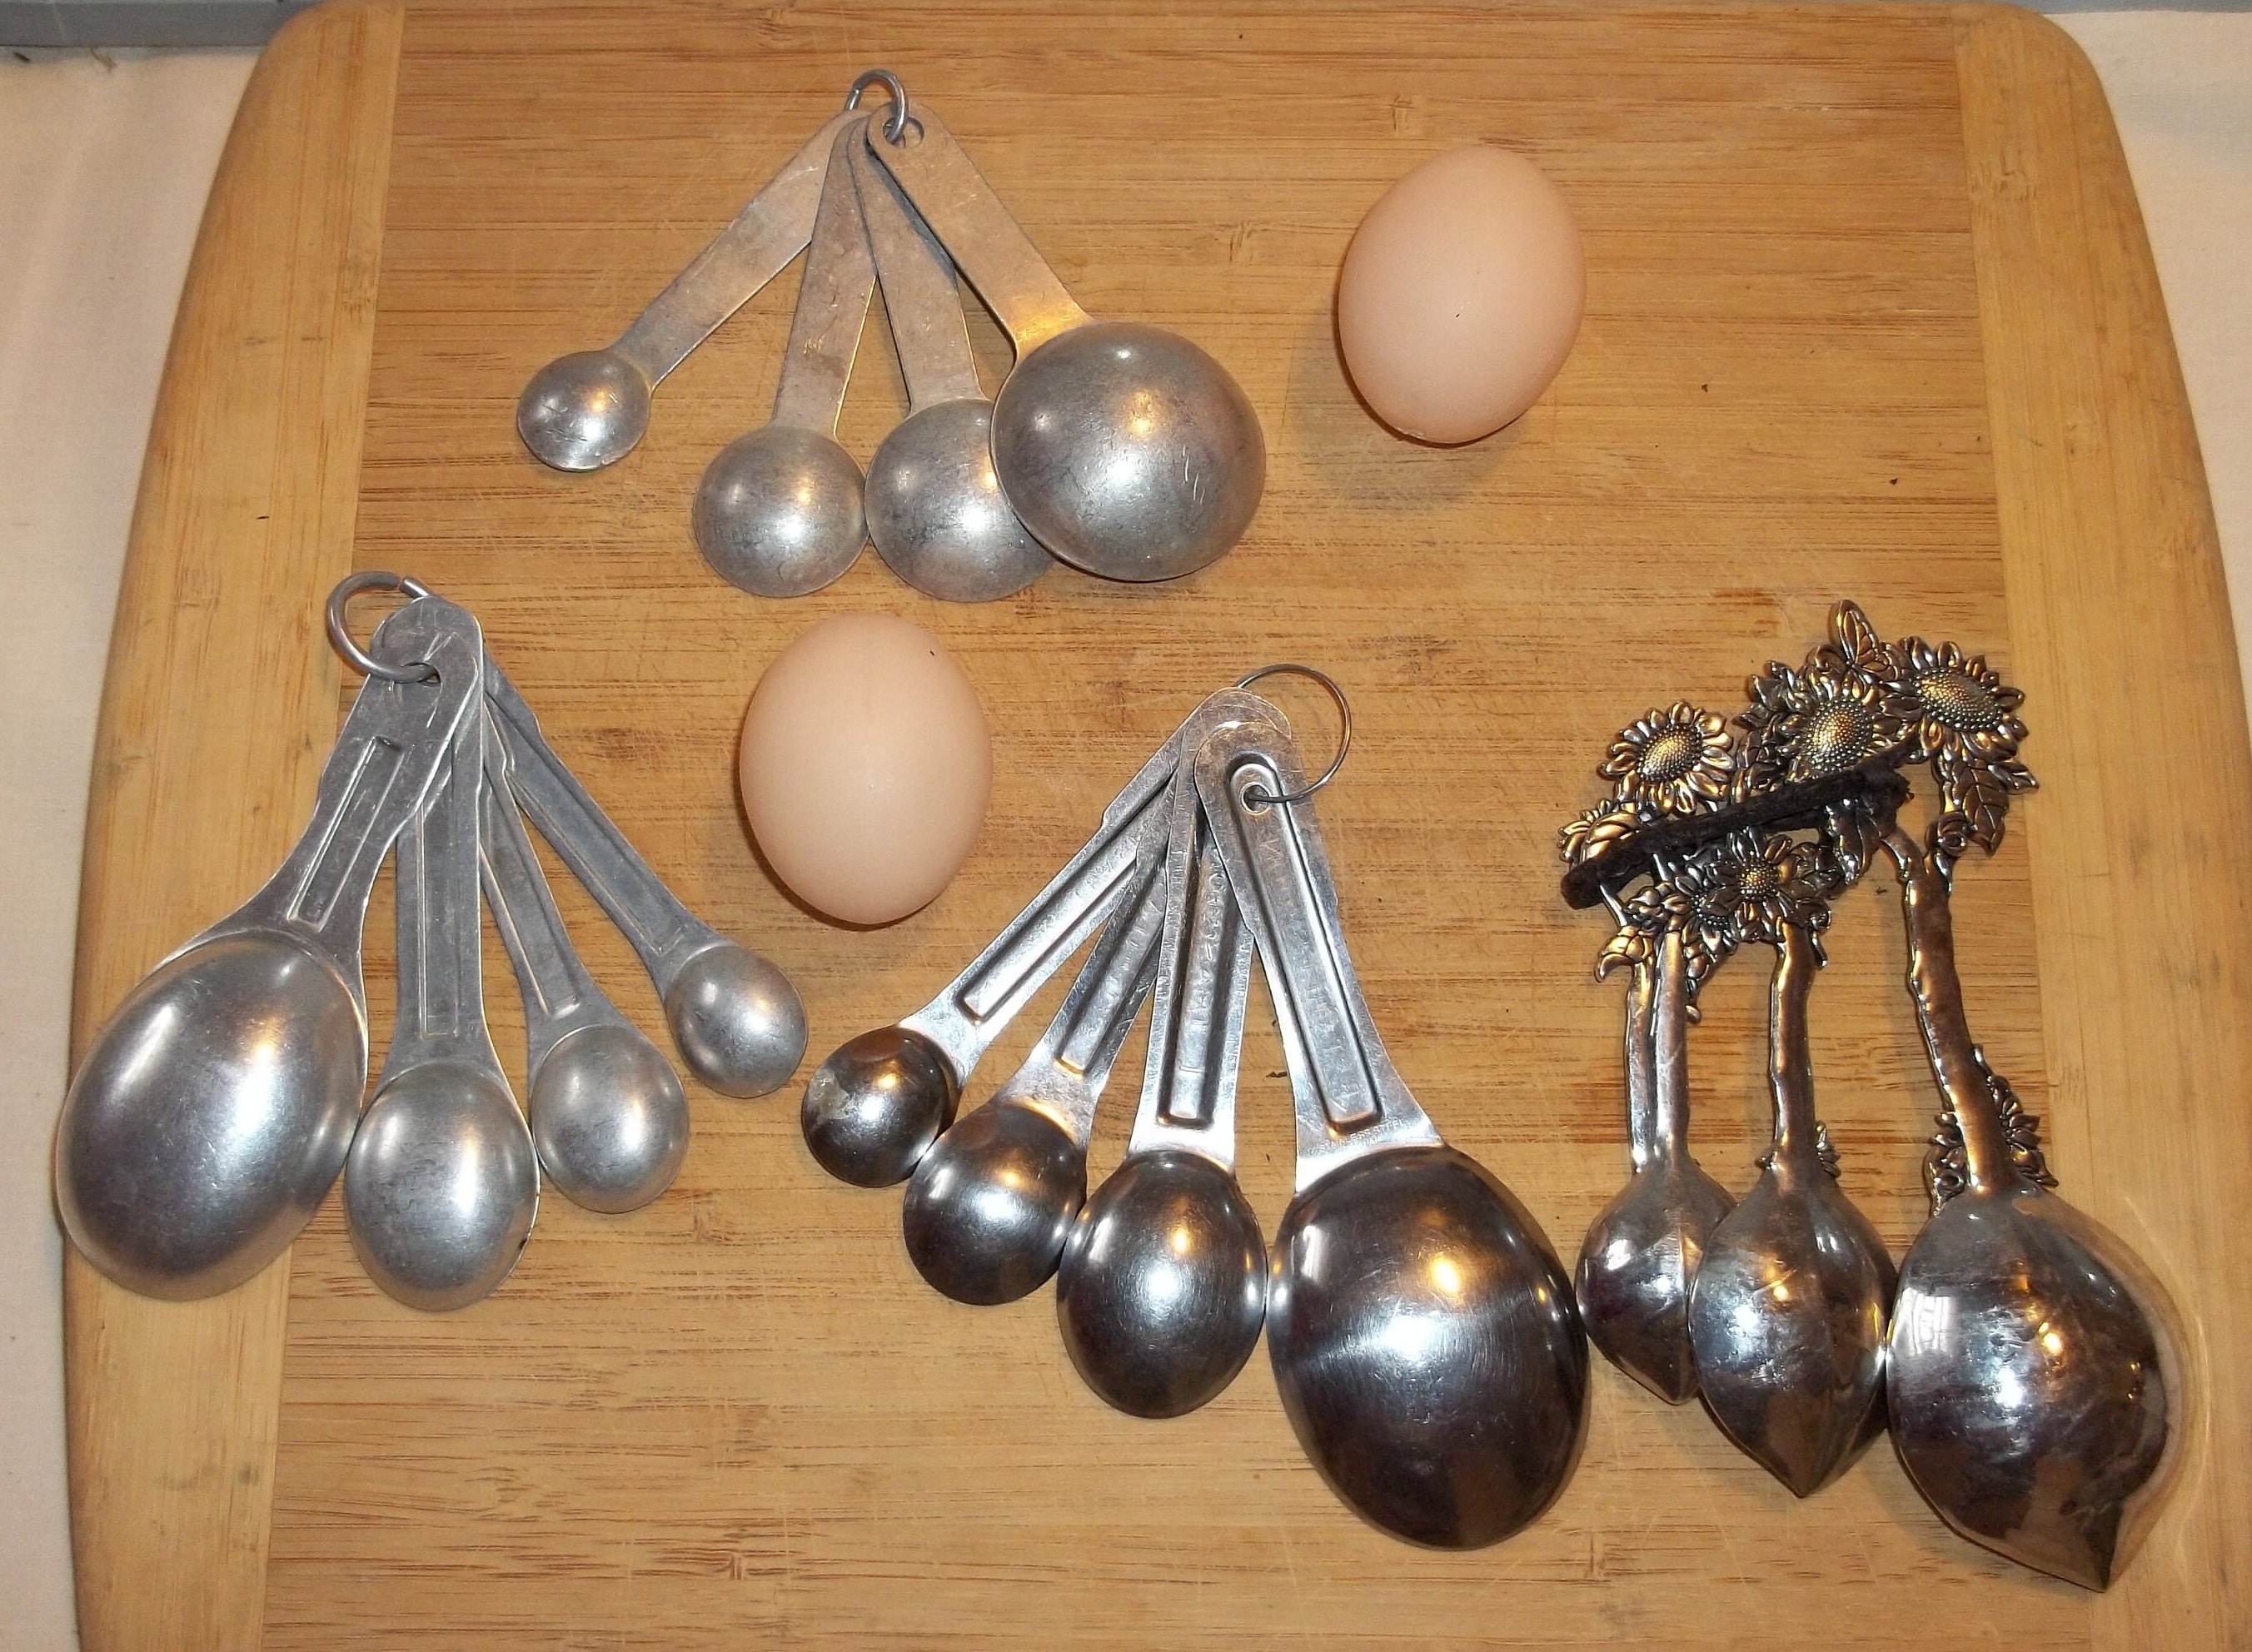 Vintage Aluminum Metal Measuring Spoons Oval Nesting Set of 4 on